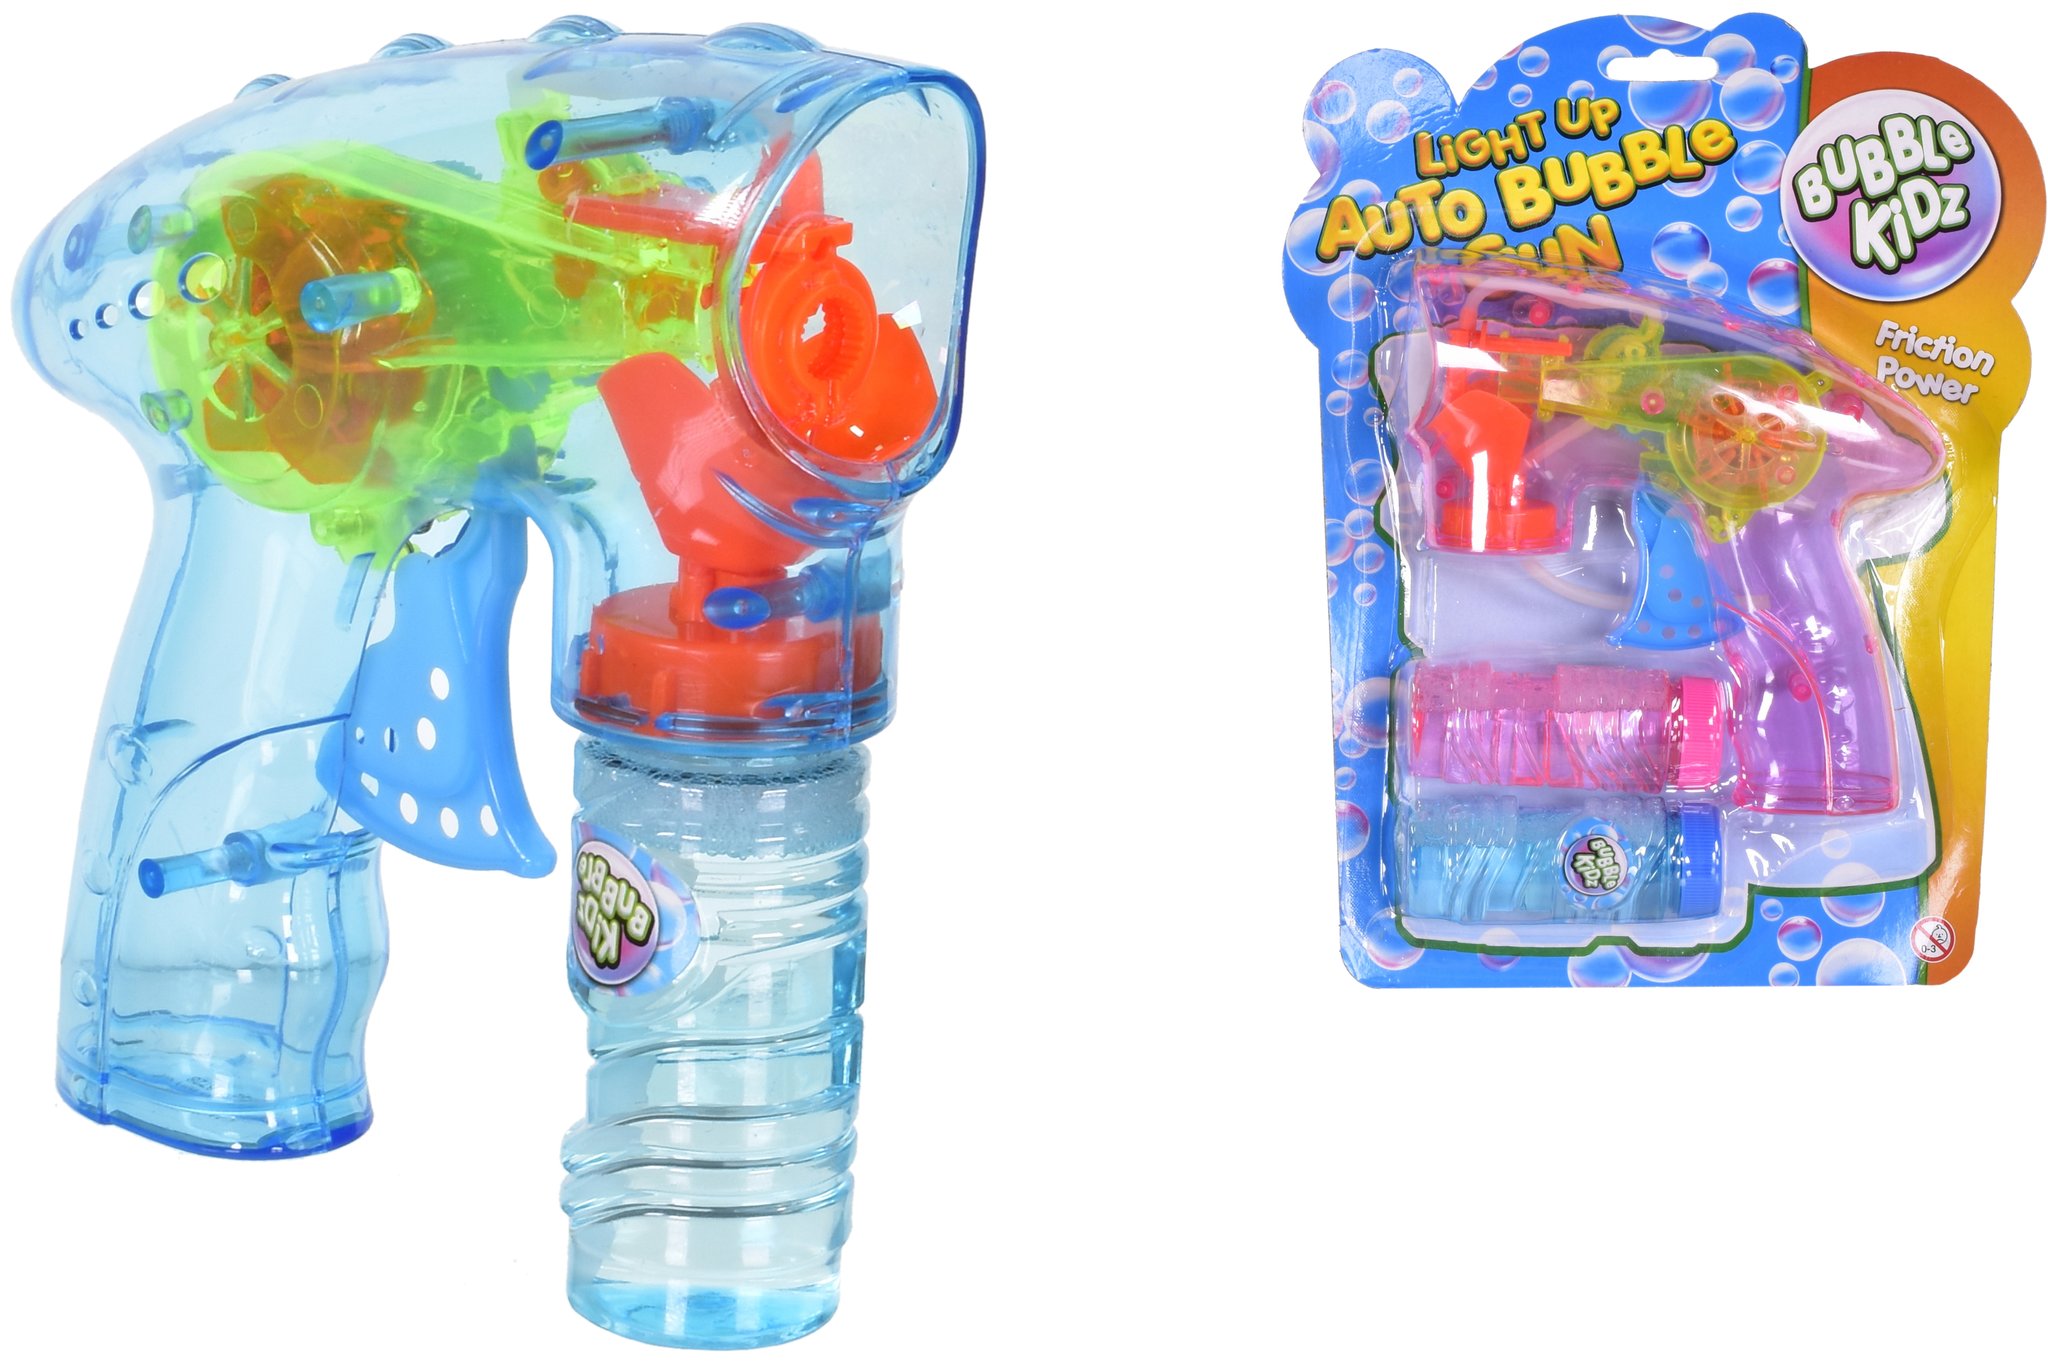 LED Light Up Bubble Shooter Gun Toy Free Solution Set Kids